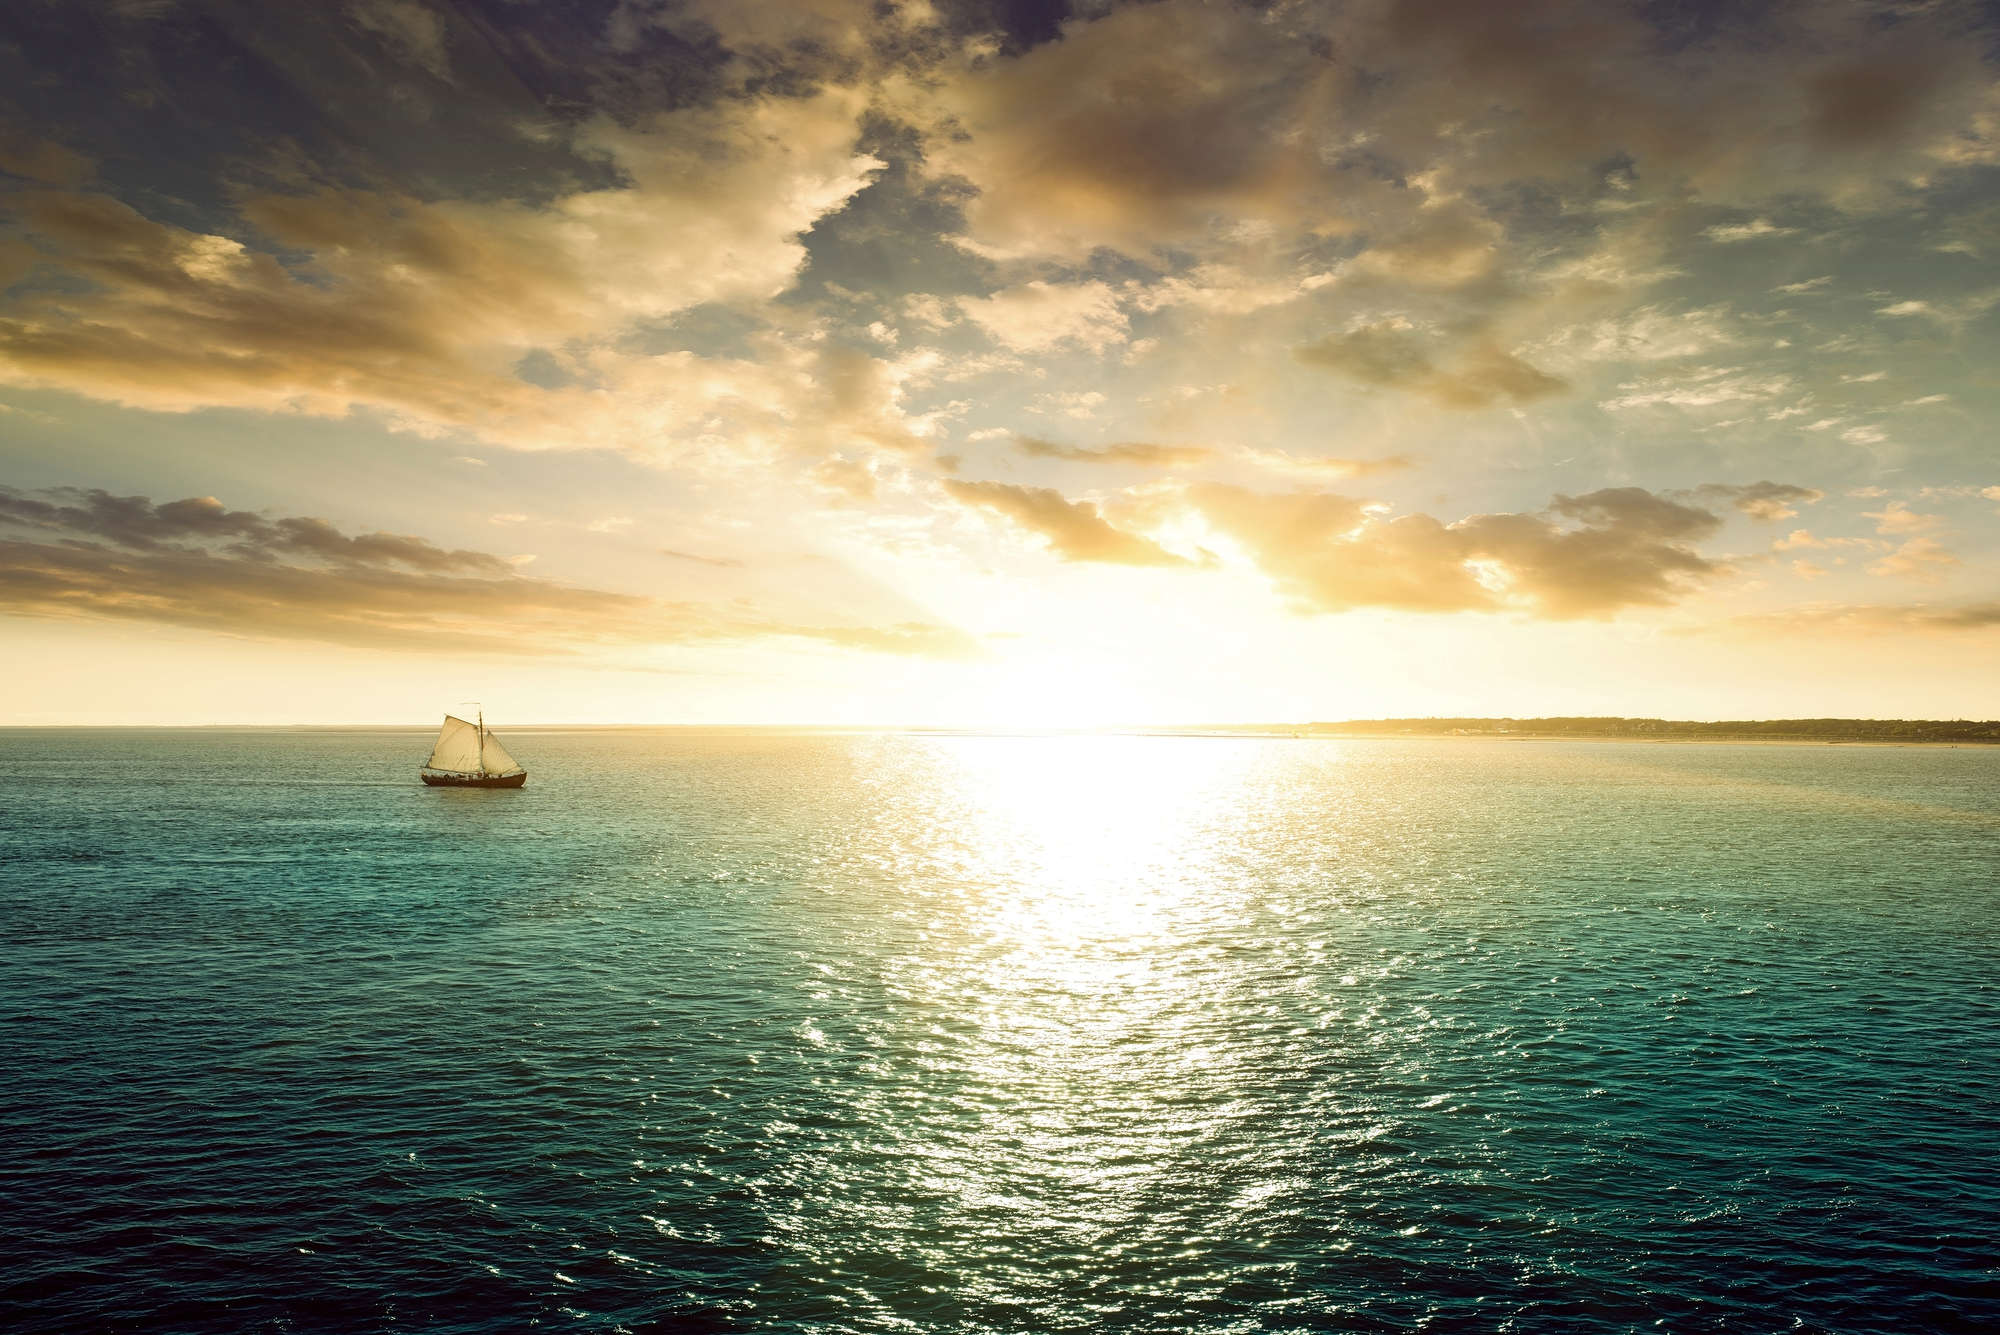             Meer Fototapete Segelboot bei Sonnenuntergang auf Perlmutt Glattvlies
        